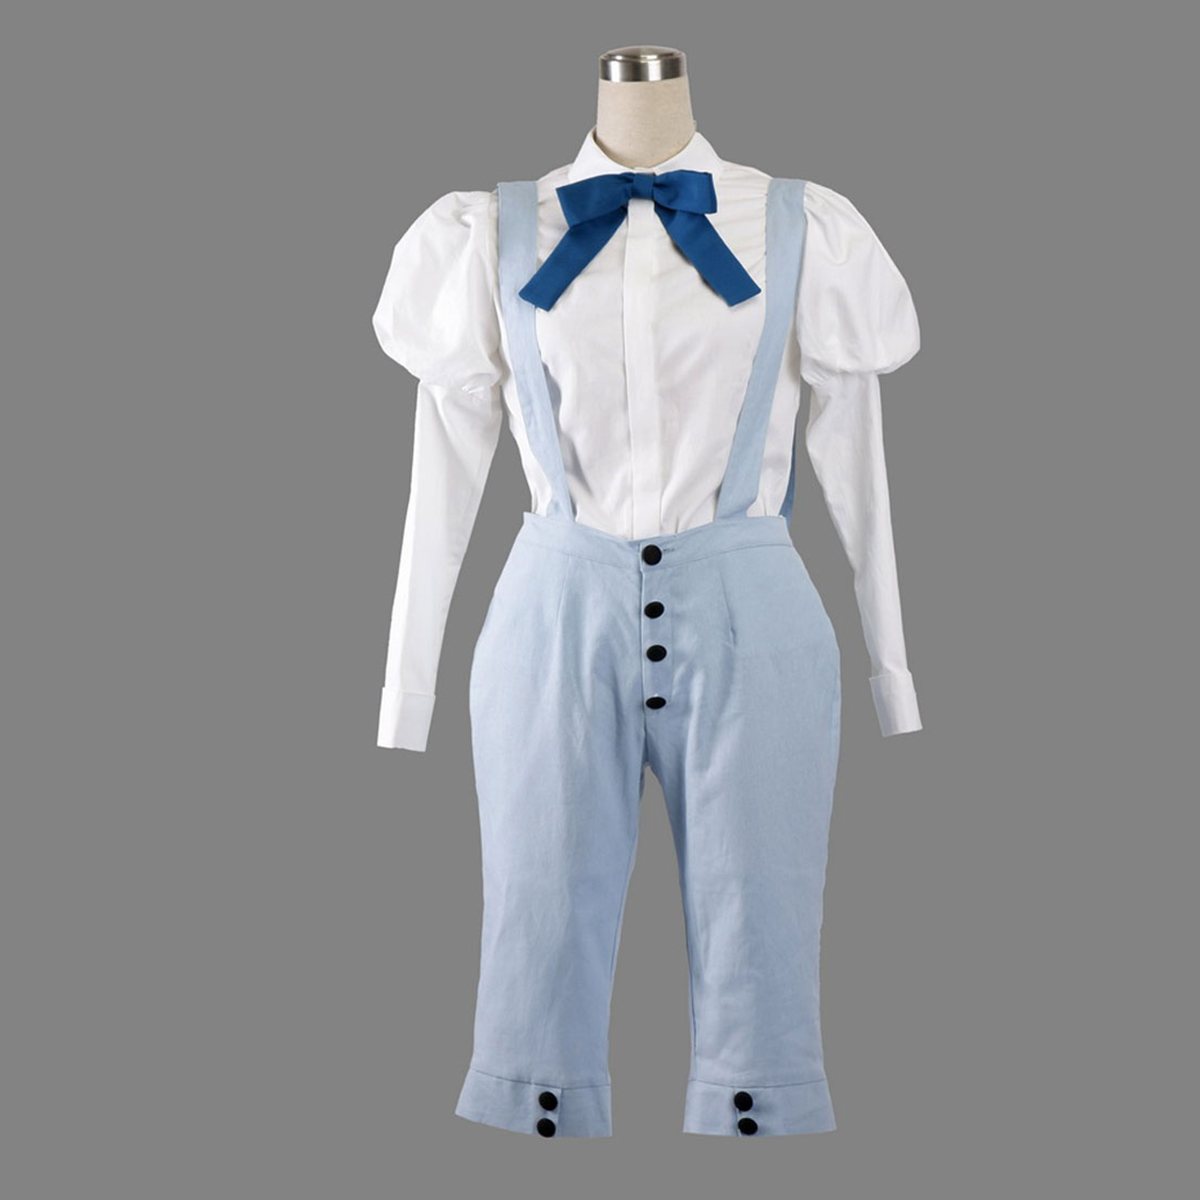 Axis Powers Hetalia Ukraine 1 Anime Cosplay Costumes Outfit